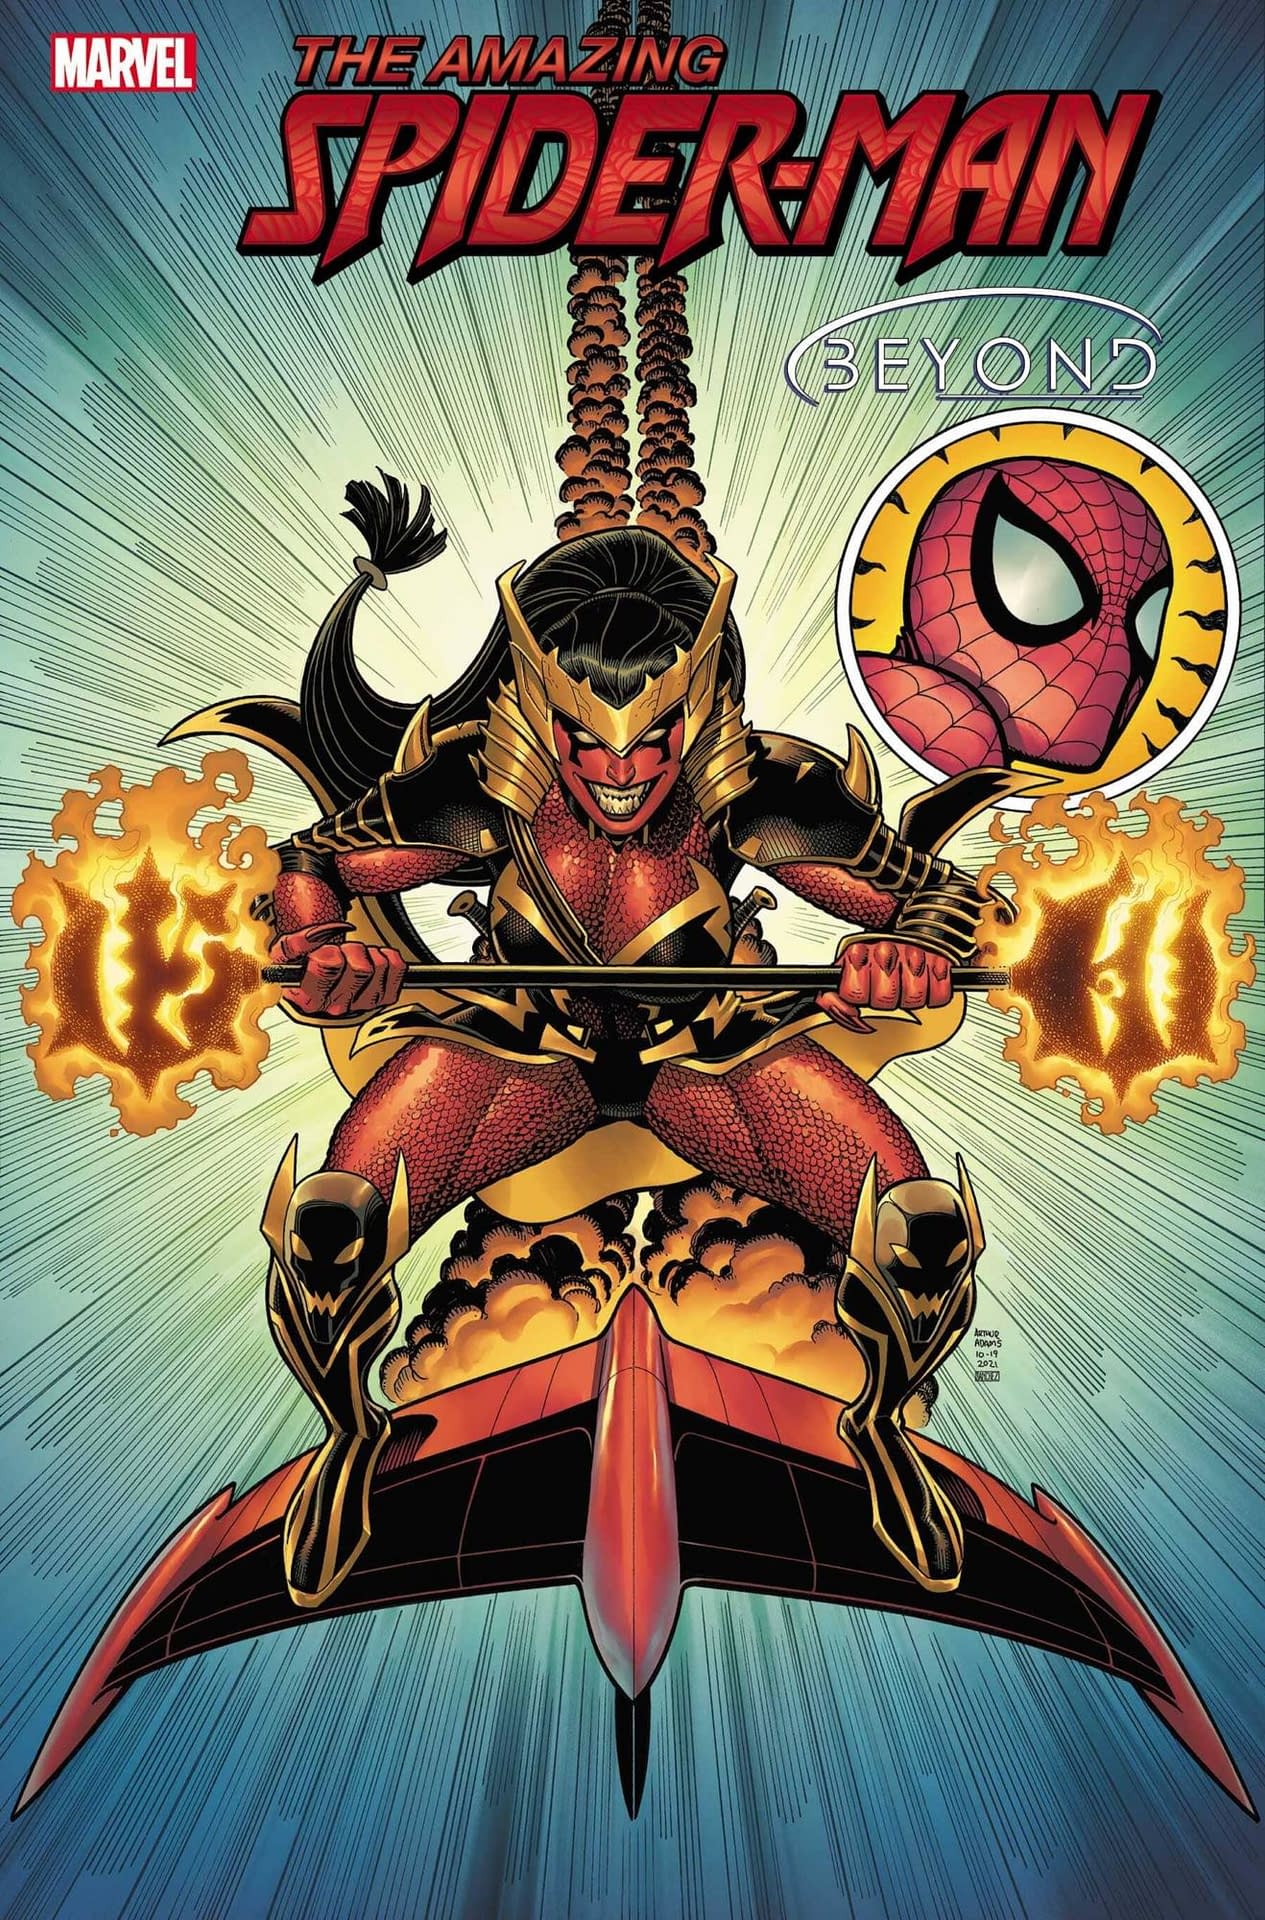 Web of Spider-Man #39 (1988)  Superhéroes, Marvel, Marvel cómics